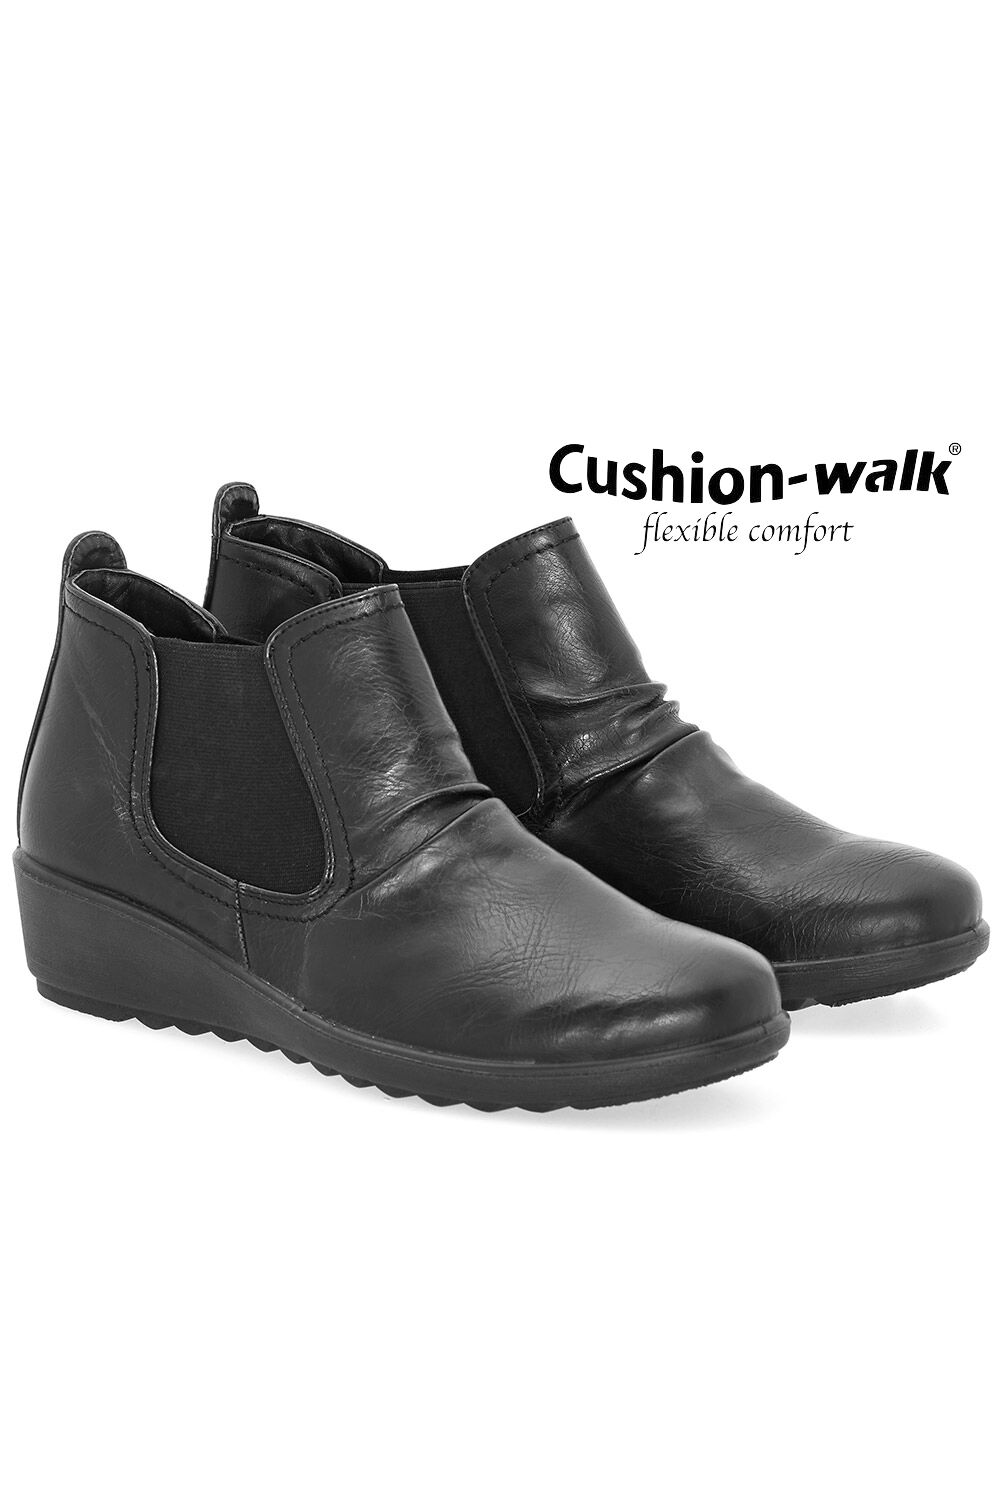 cushion walk wedge boots